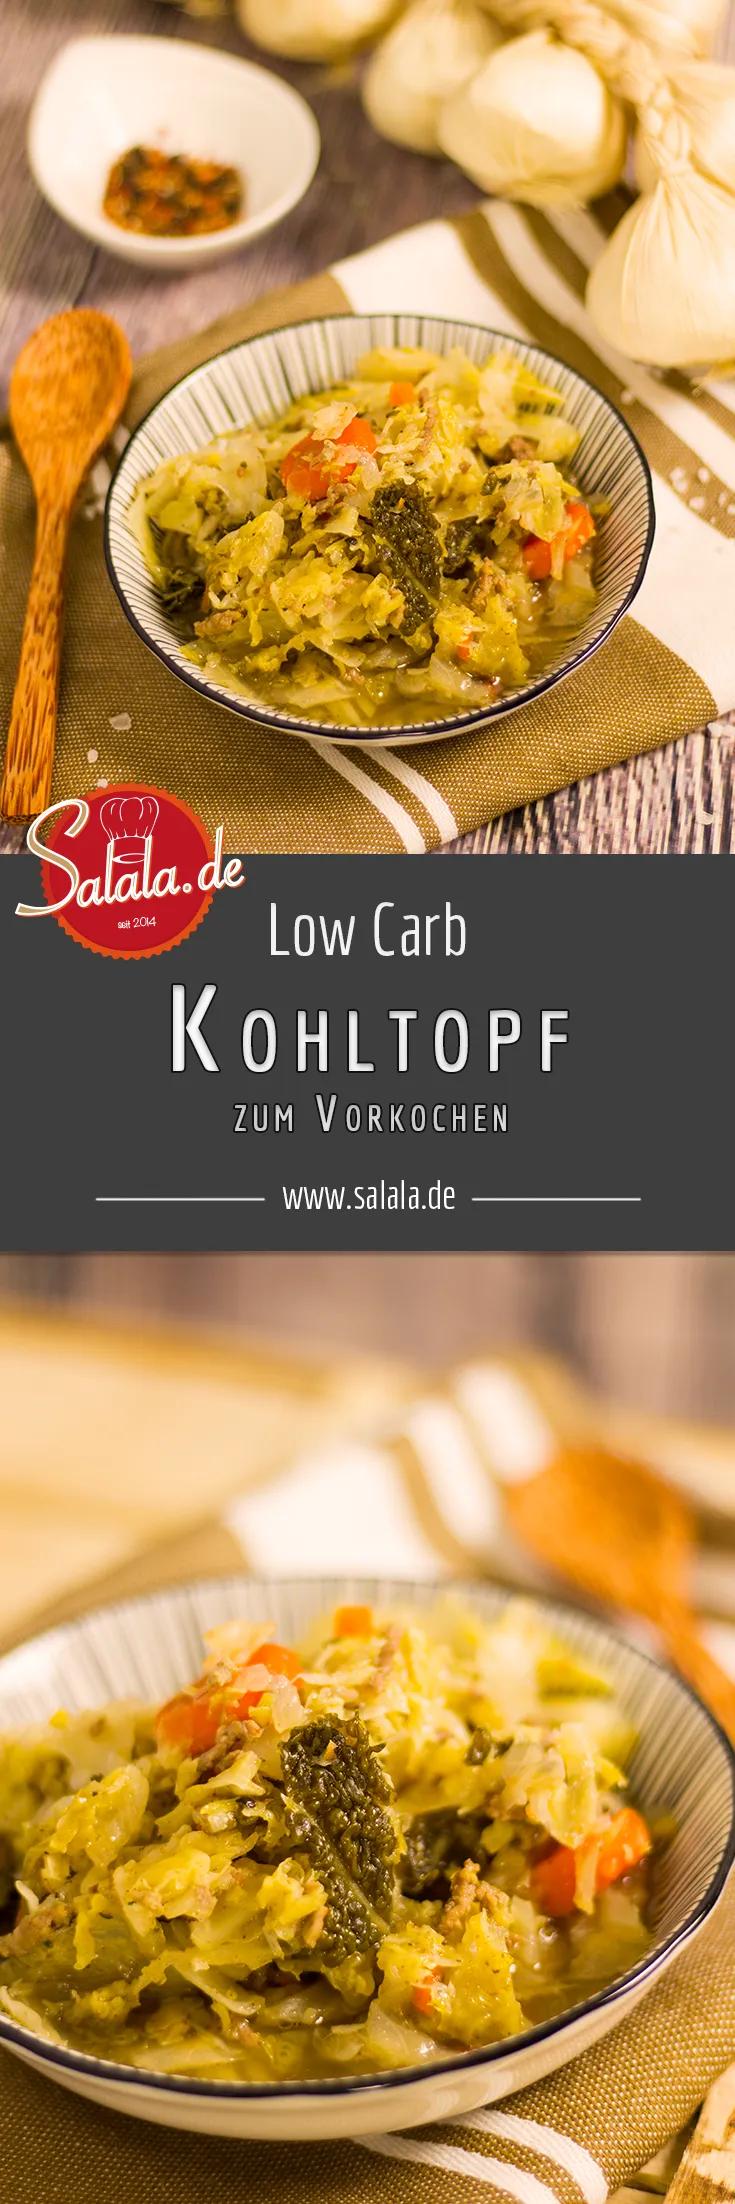 Low Carb Kohltopf zum vorkochen - by salala.de - Weißkohl Wirsing Speck ...